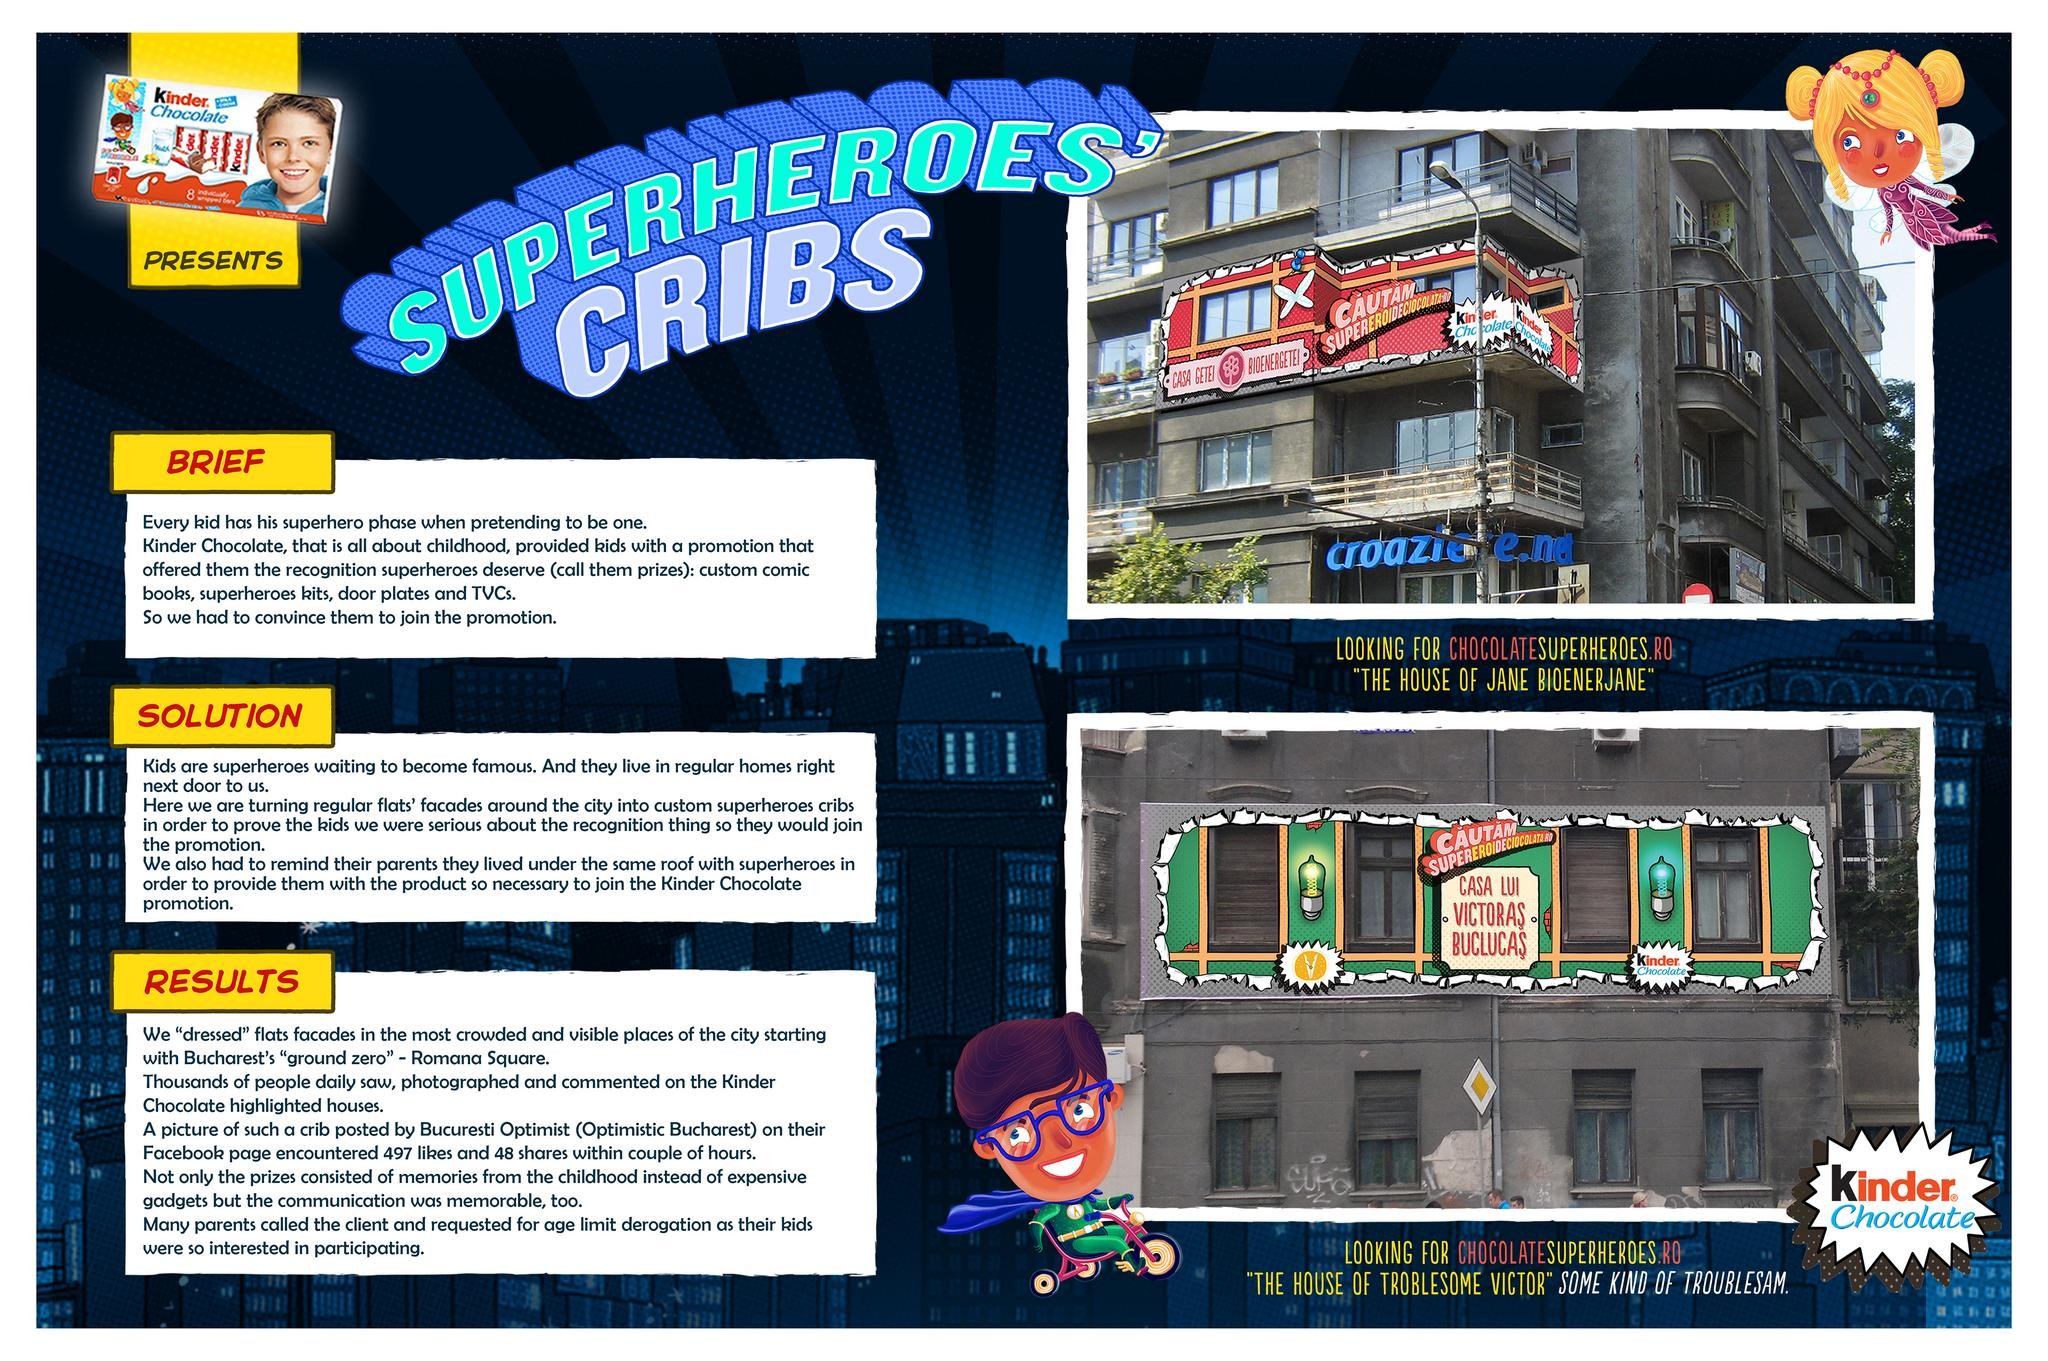 SUPERHEROES' CRIBS